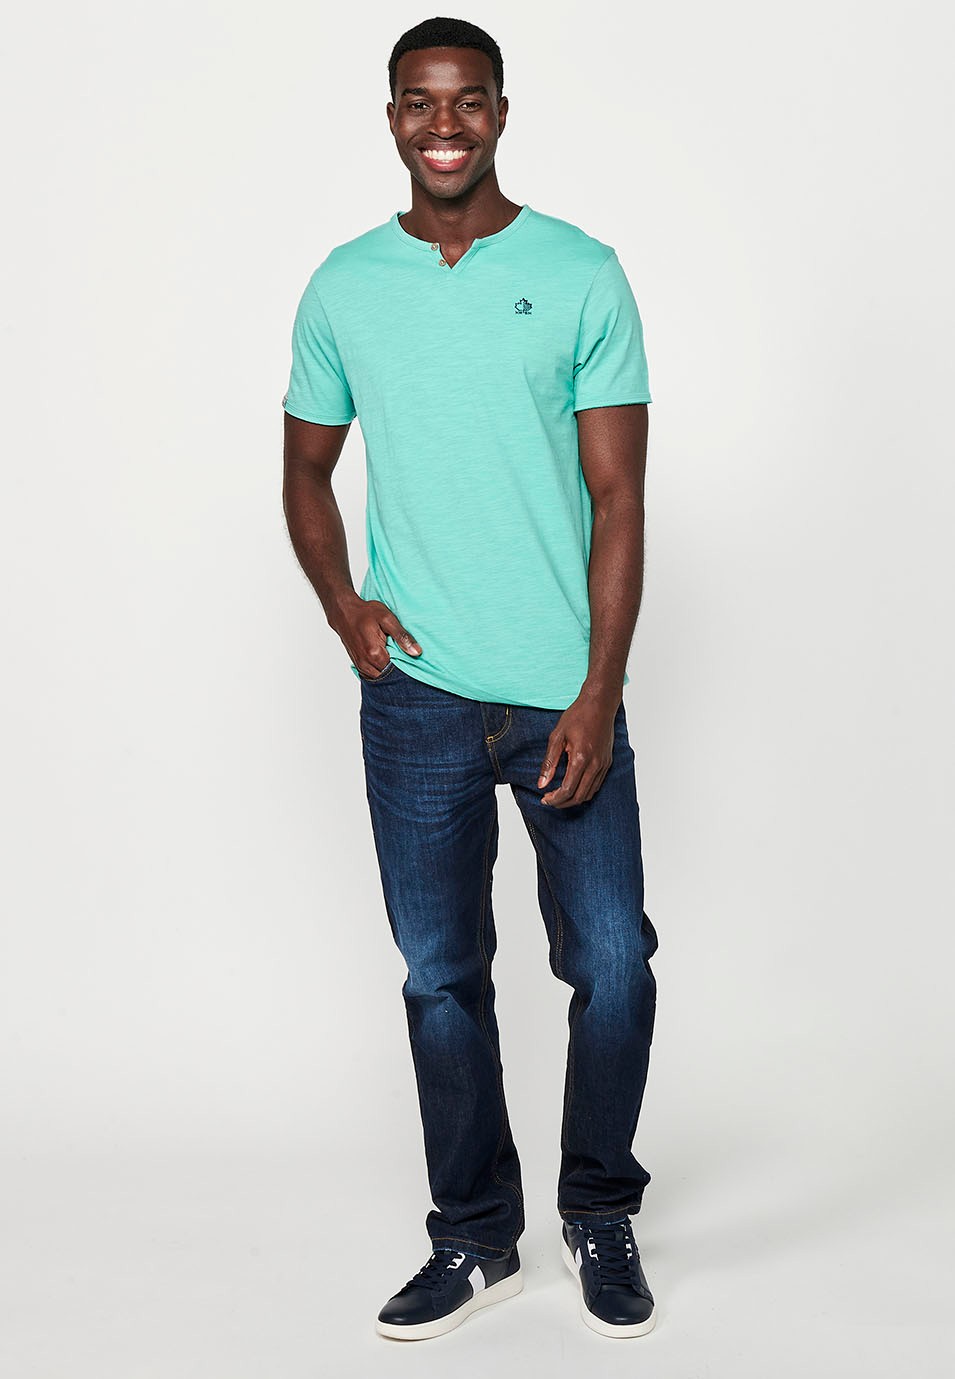 Basic short-sleeved cotton t-shirt, V-neck with button, mint color for men 4